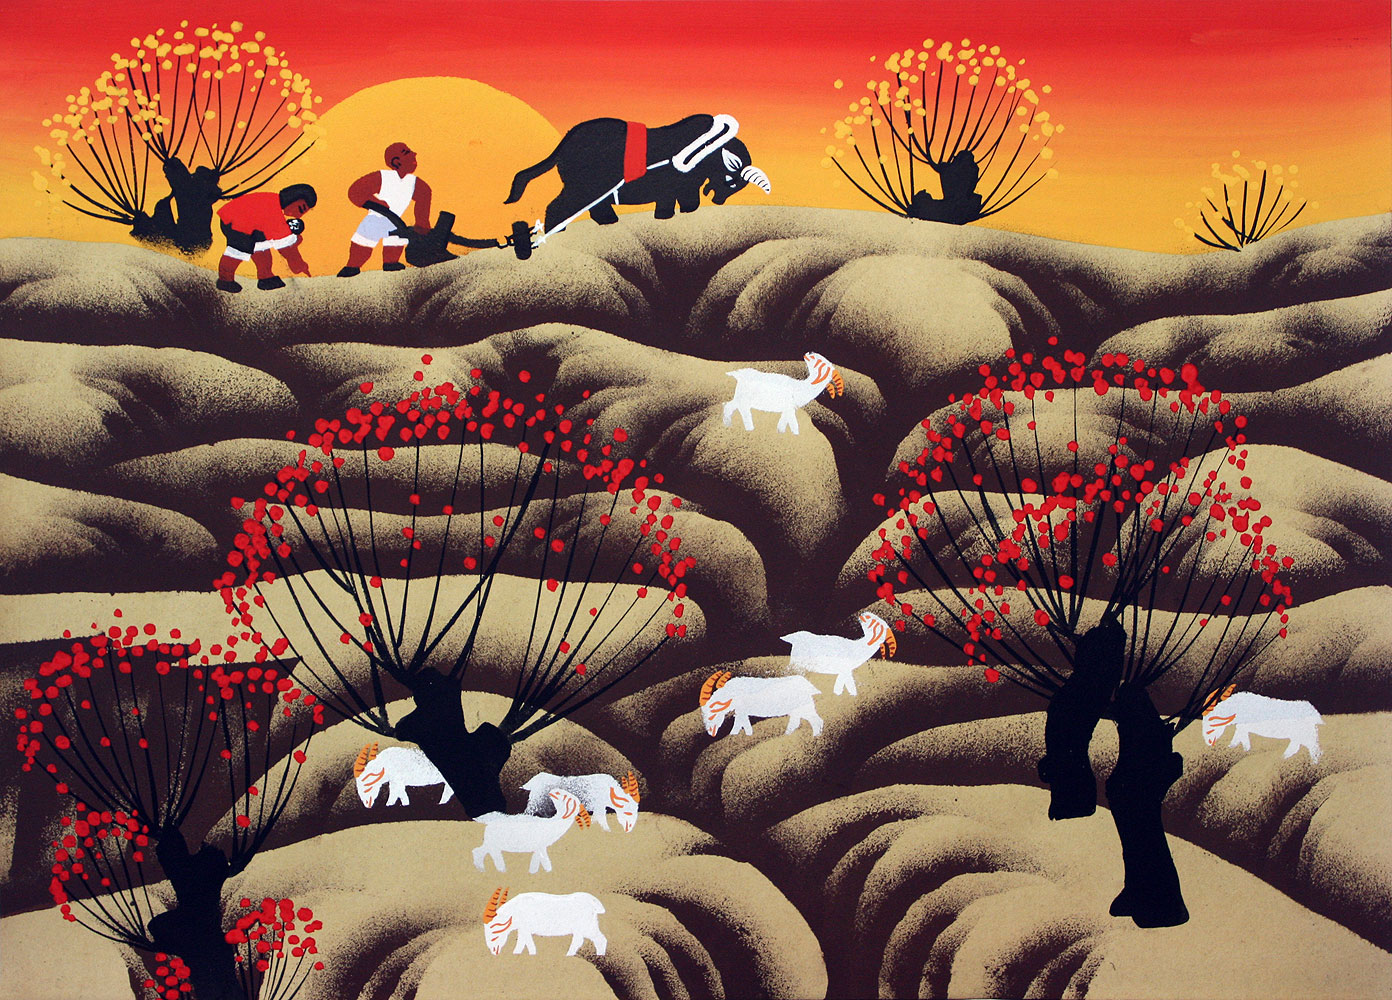 Goats and Ox - Hillside Scene - Chinese Folk Art Painting